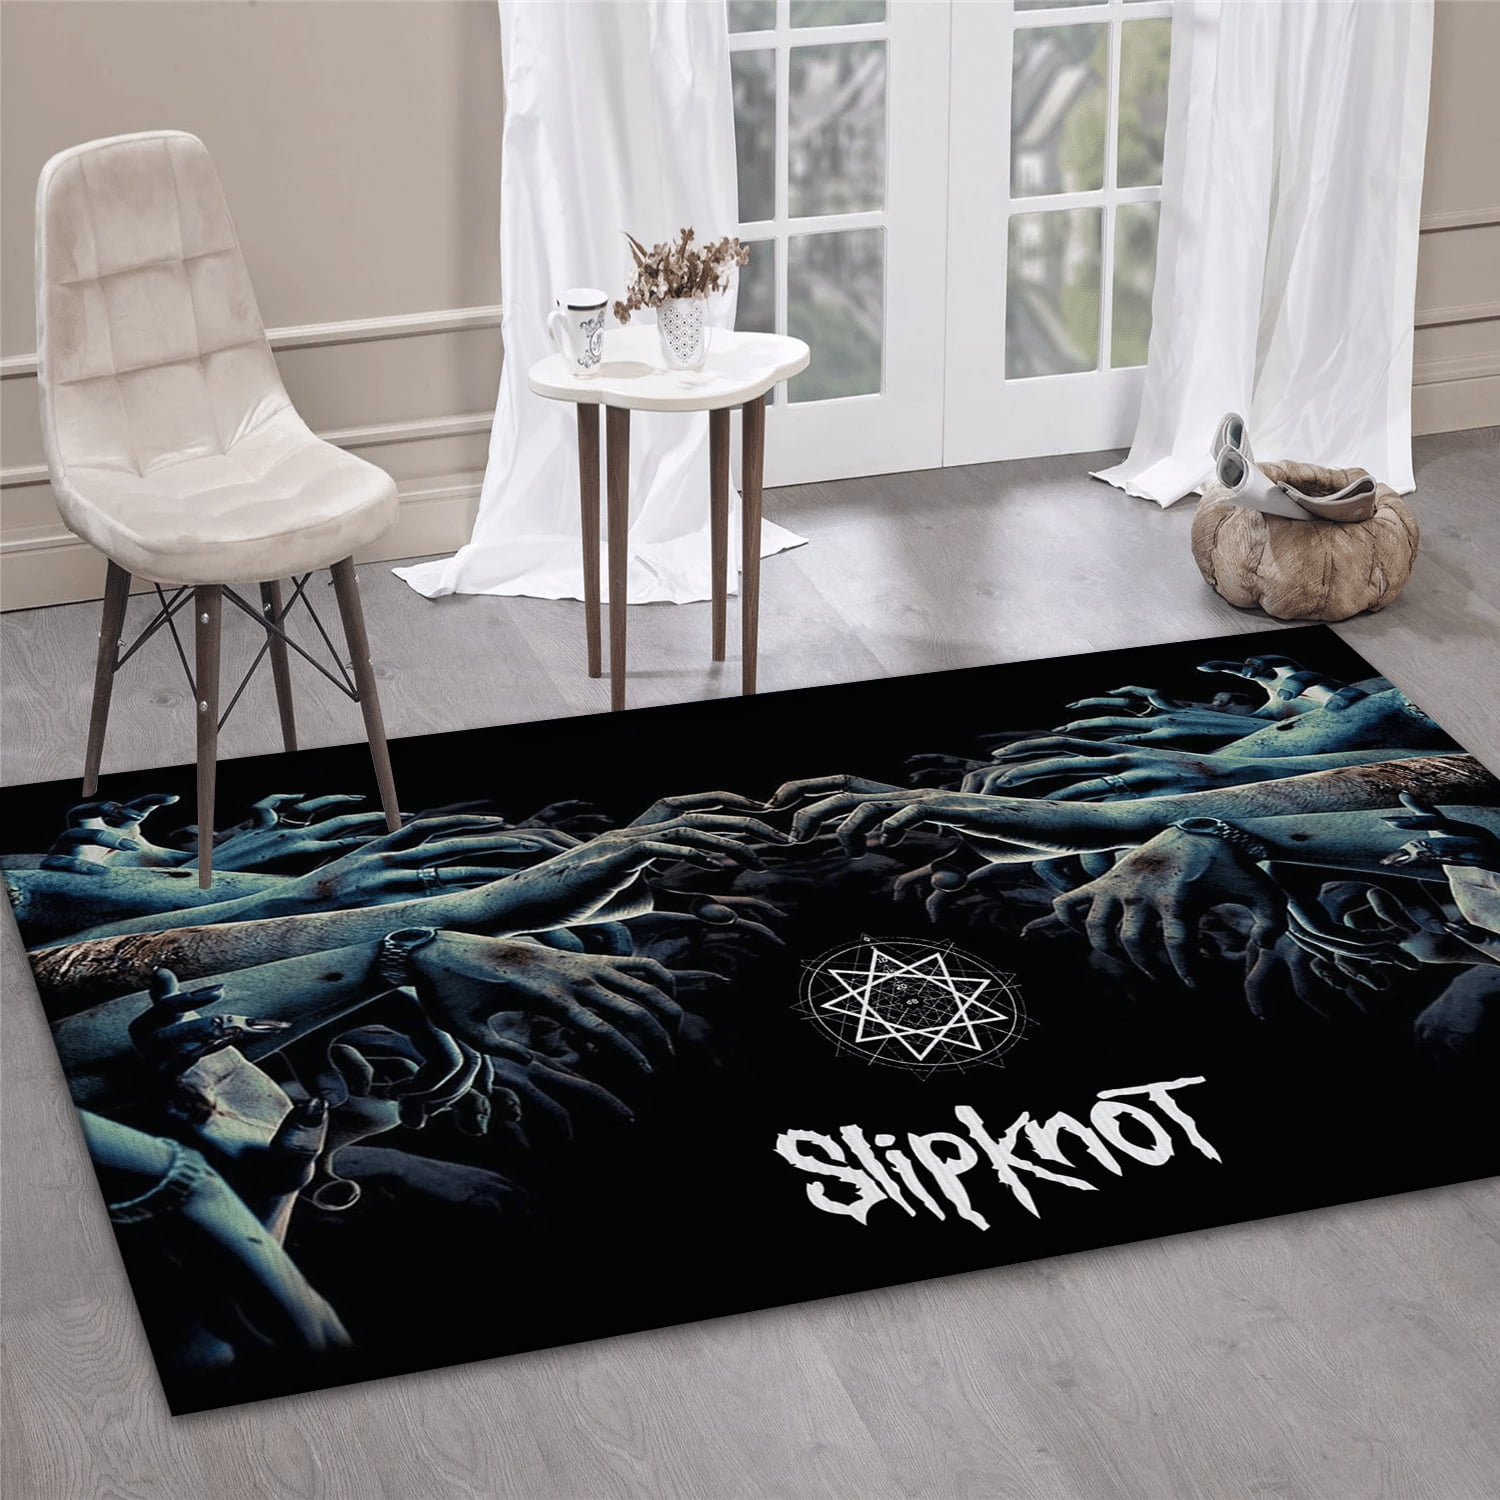 Slipknot Rock Band Music Area Rug Carpet, Living Room Rug - Floor Decor - Indoor Outdoor Rugs